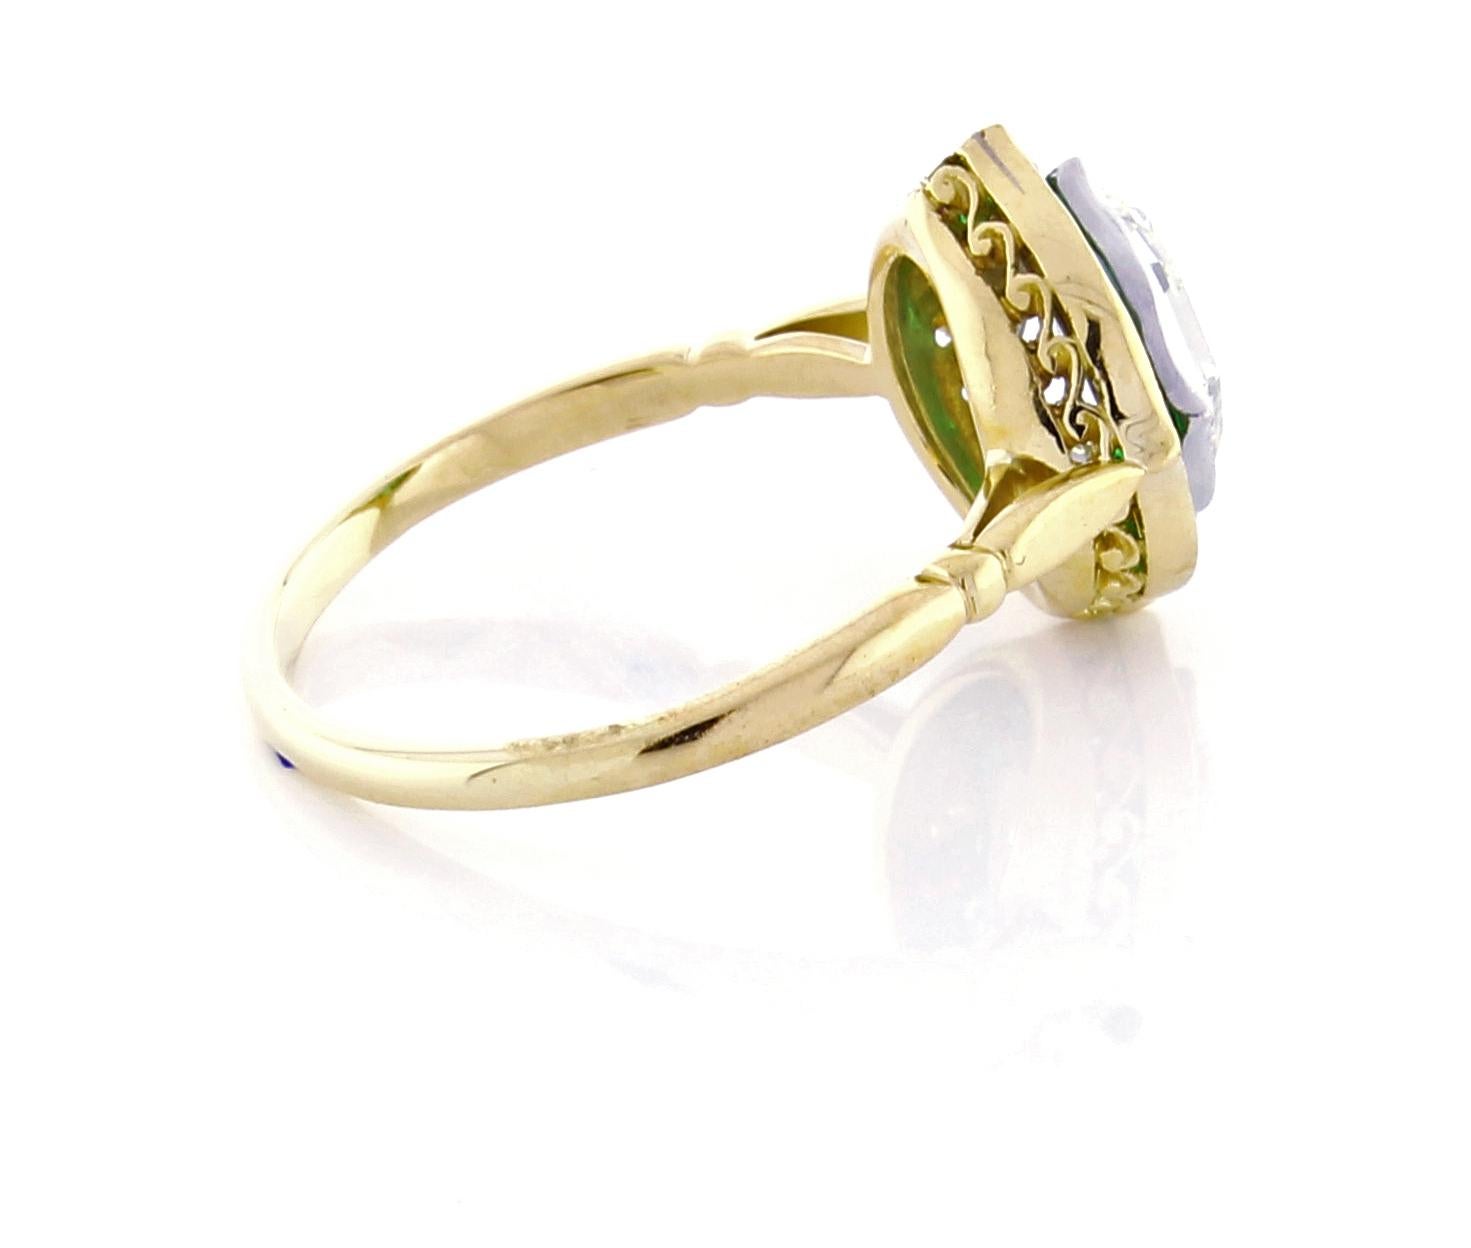 hexagon emerald ring